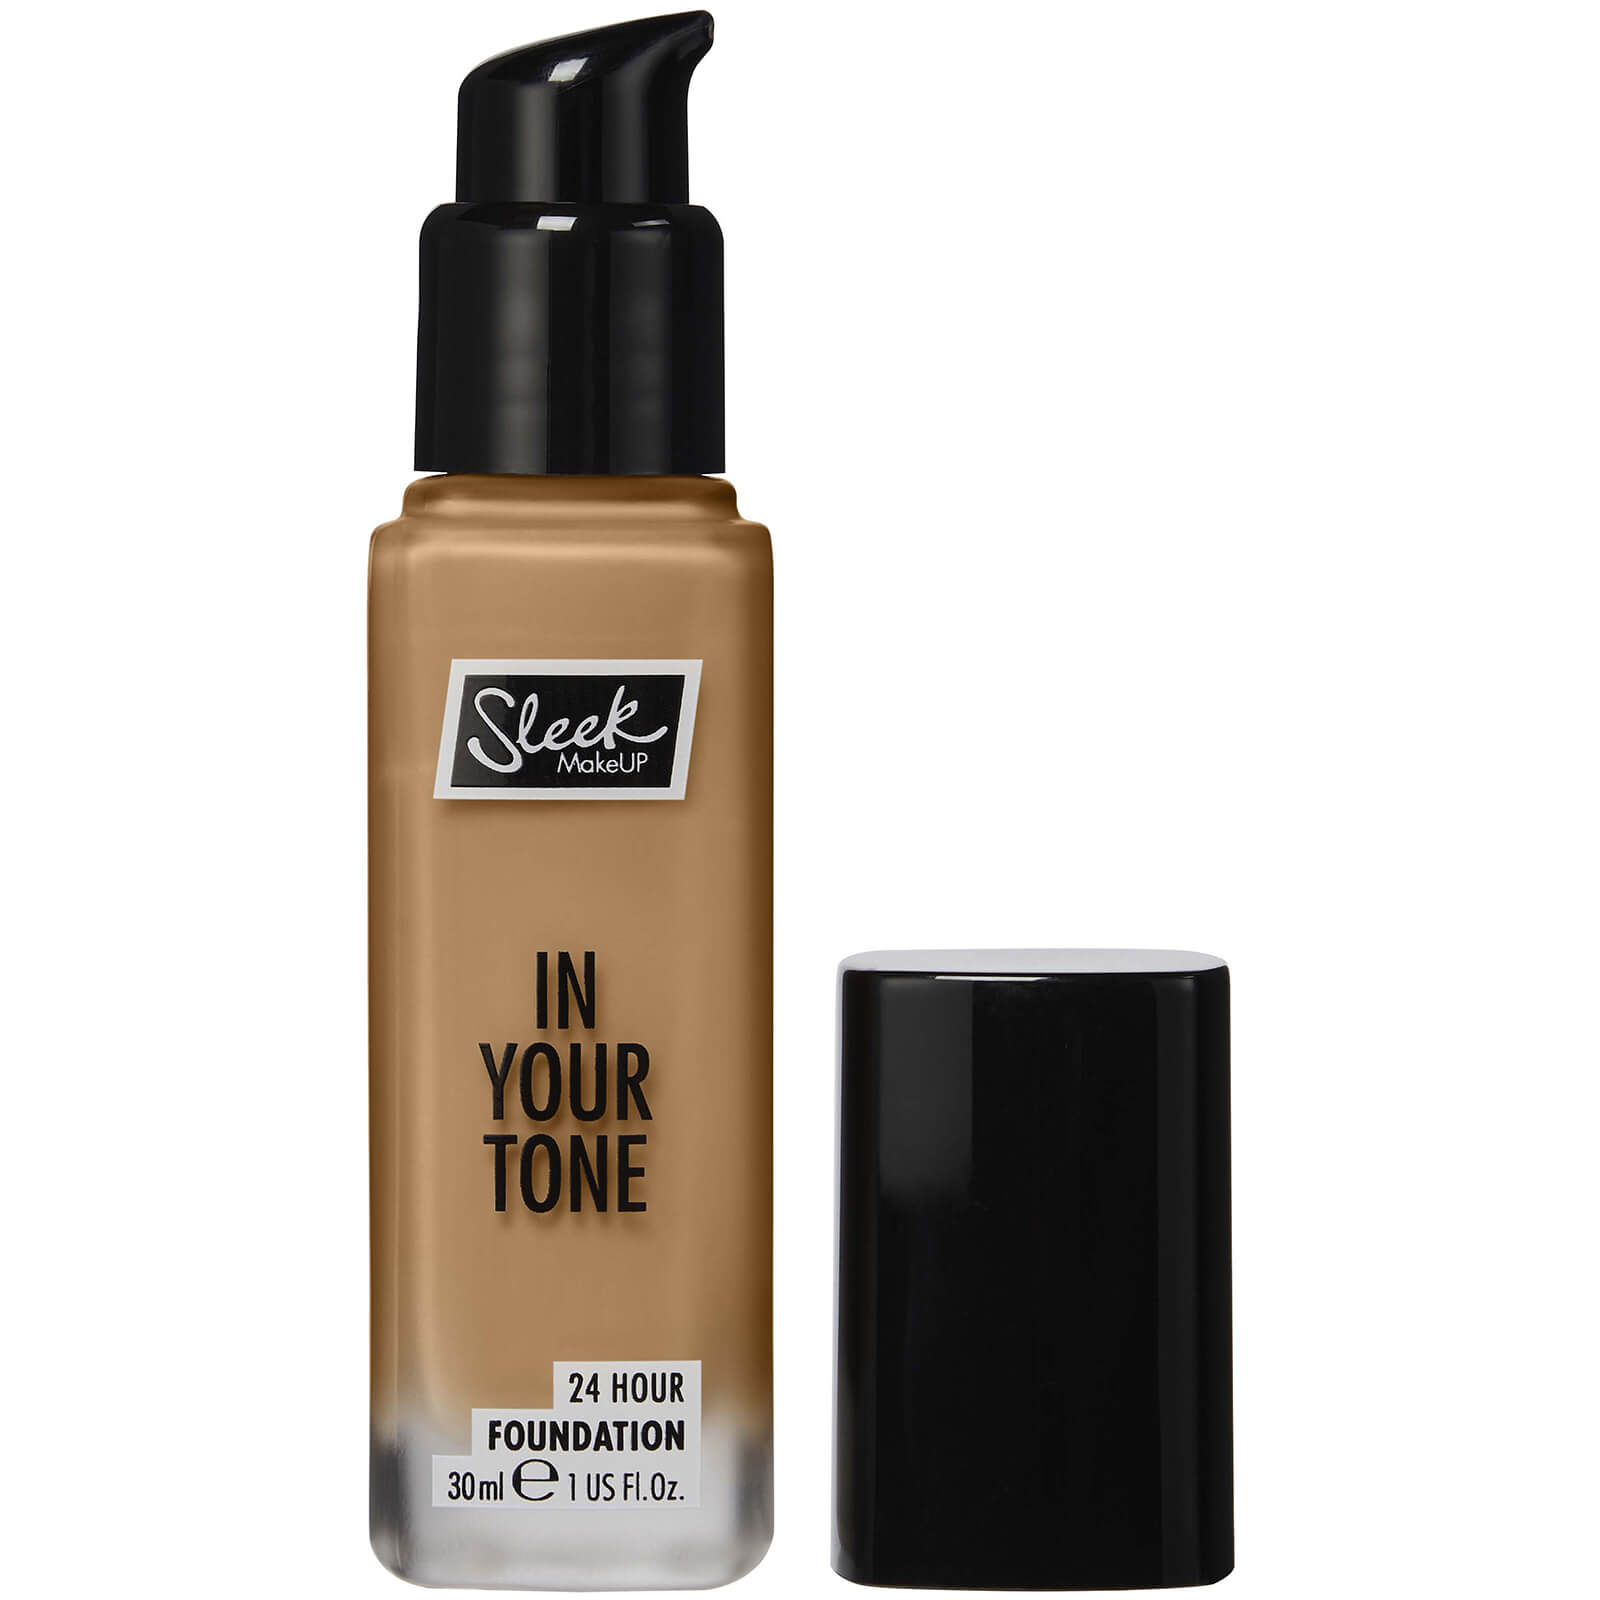 Sleek MakeUP in Your Tone 24 Hour Foundation 30ml (Various Shades) - 8W von Sleek MakeUP